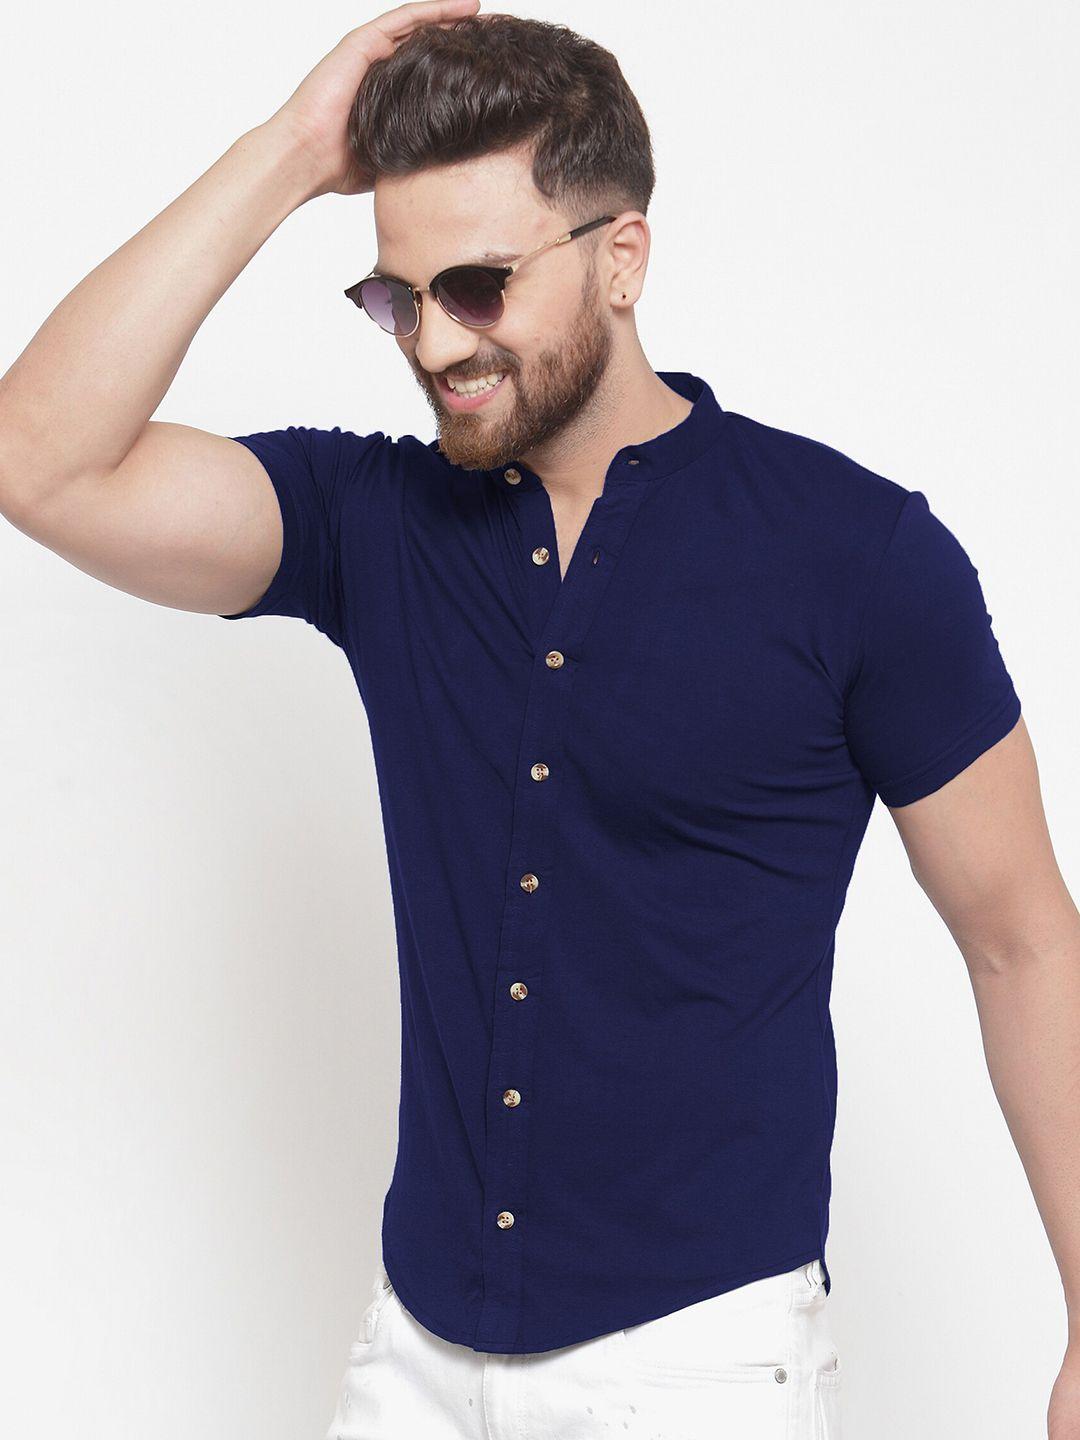 gespo men blue solid casual shirt